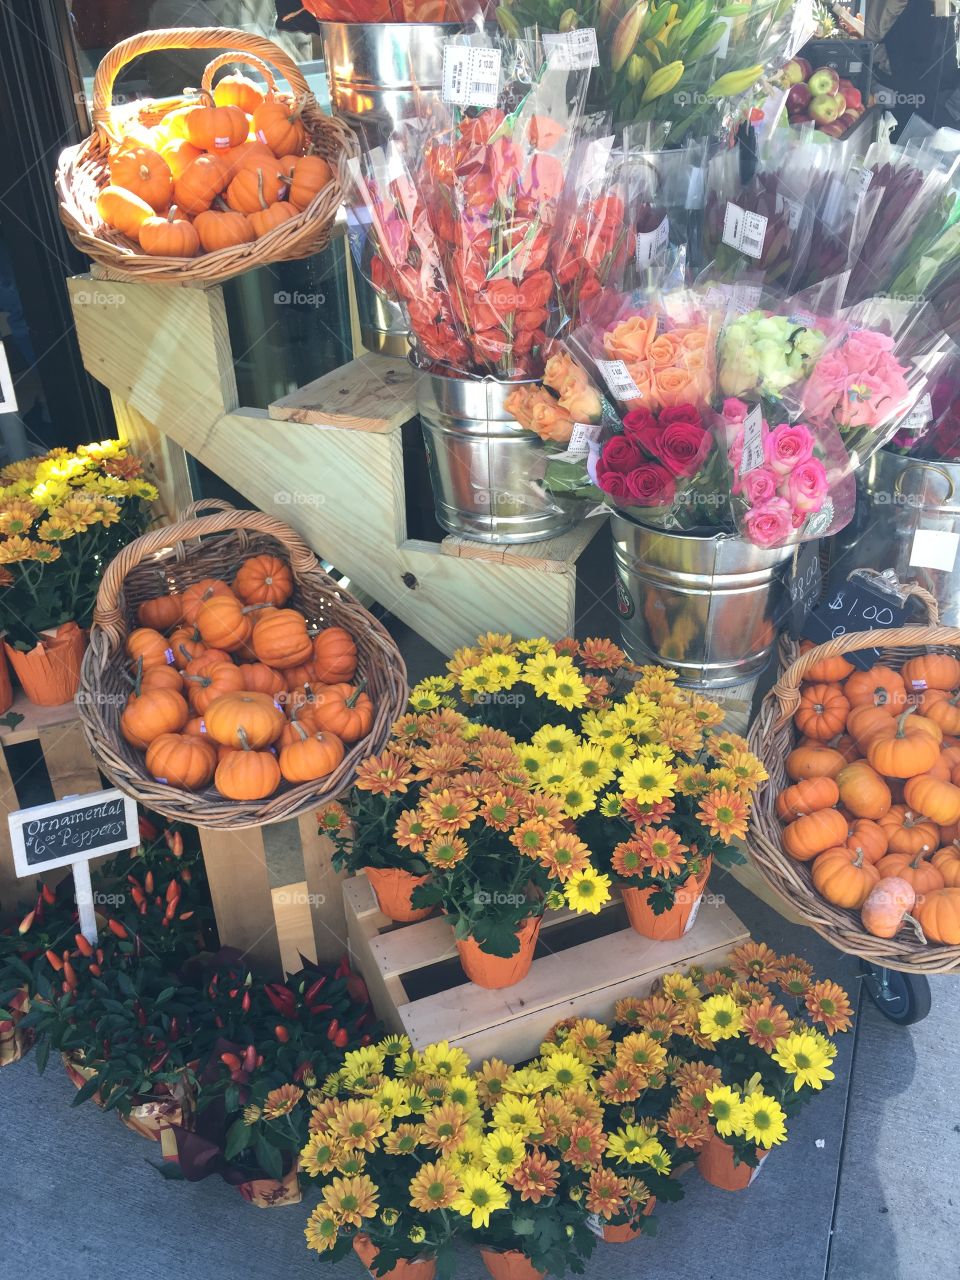 Flower/Fruit stand in Boston